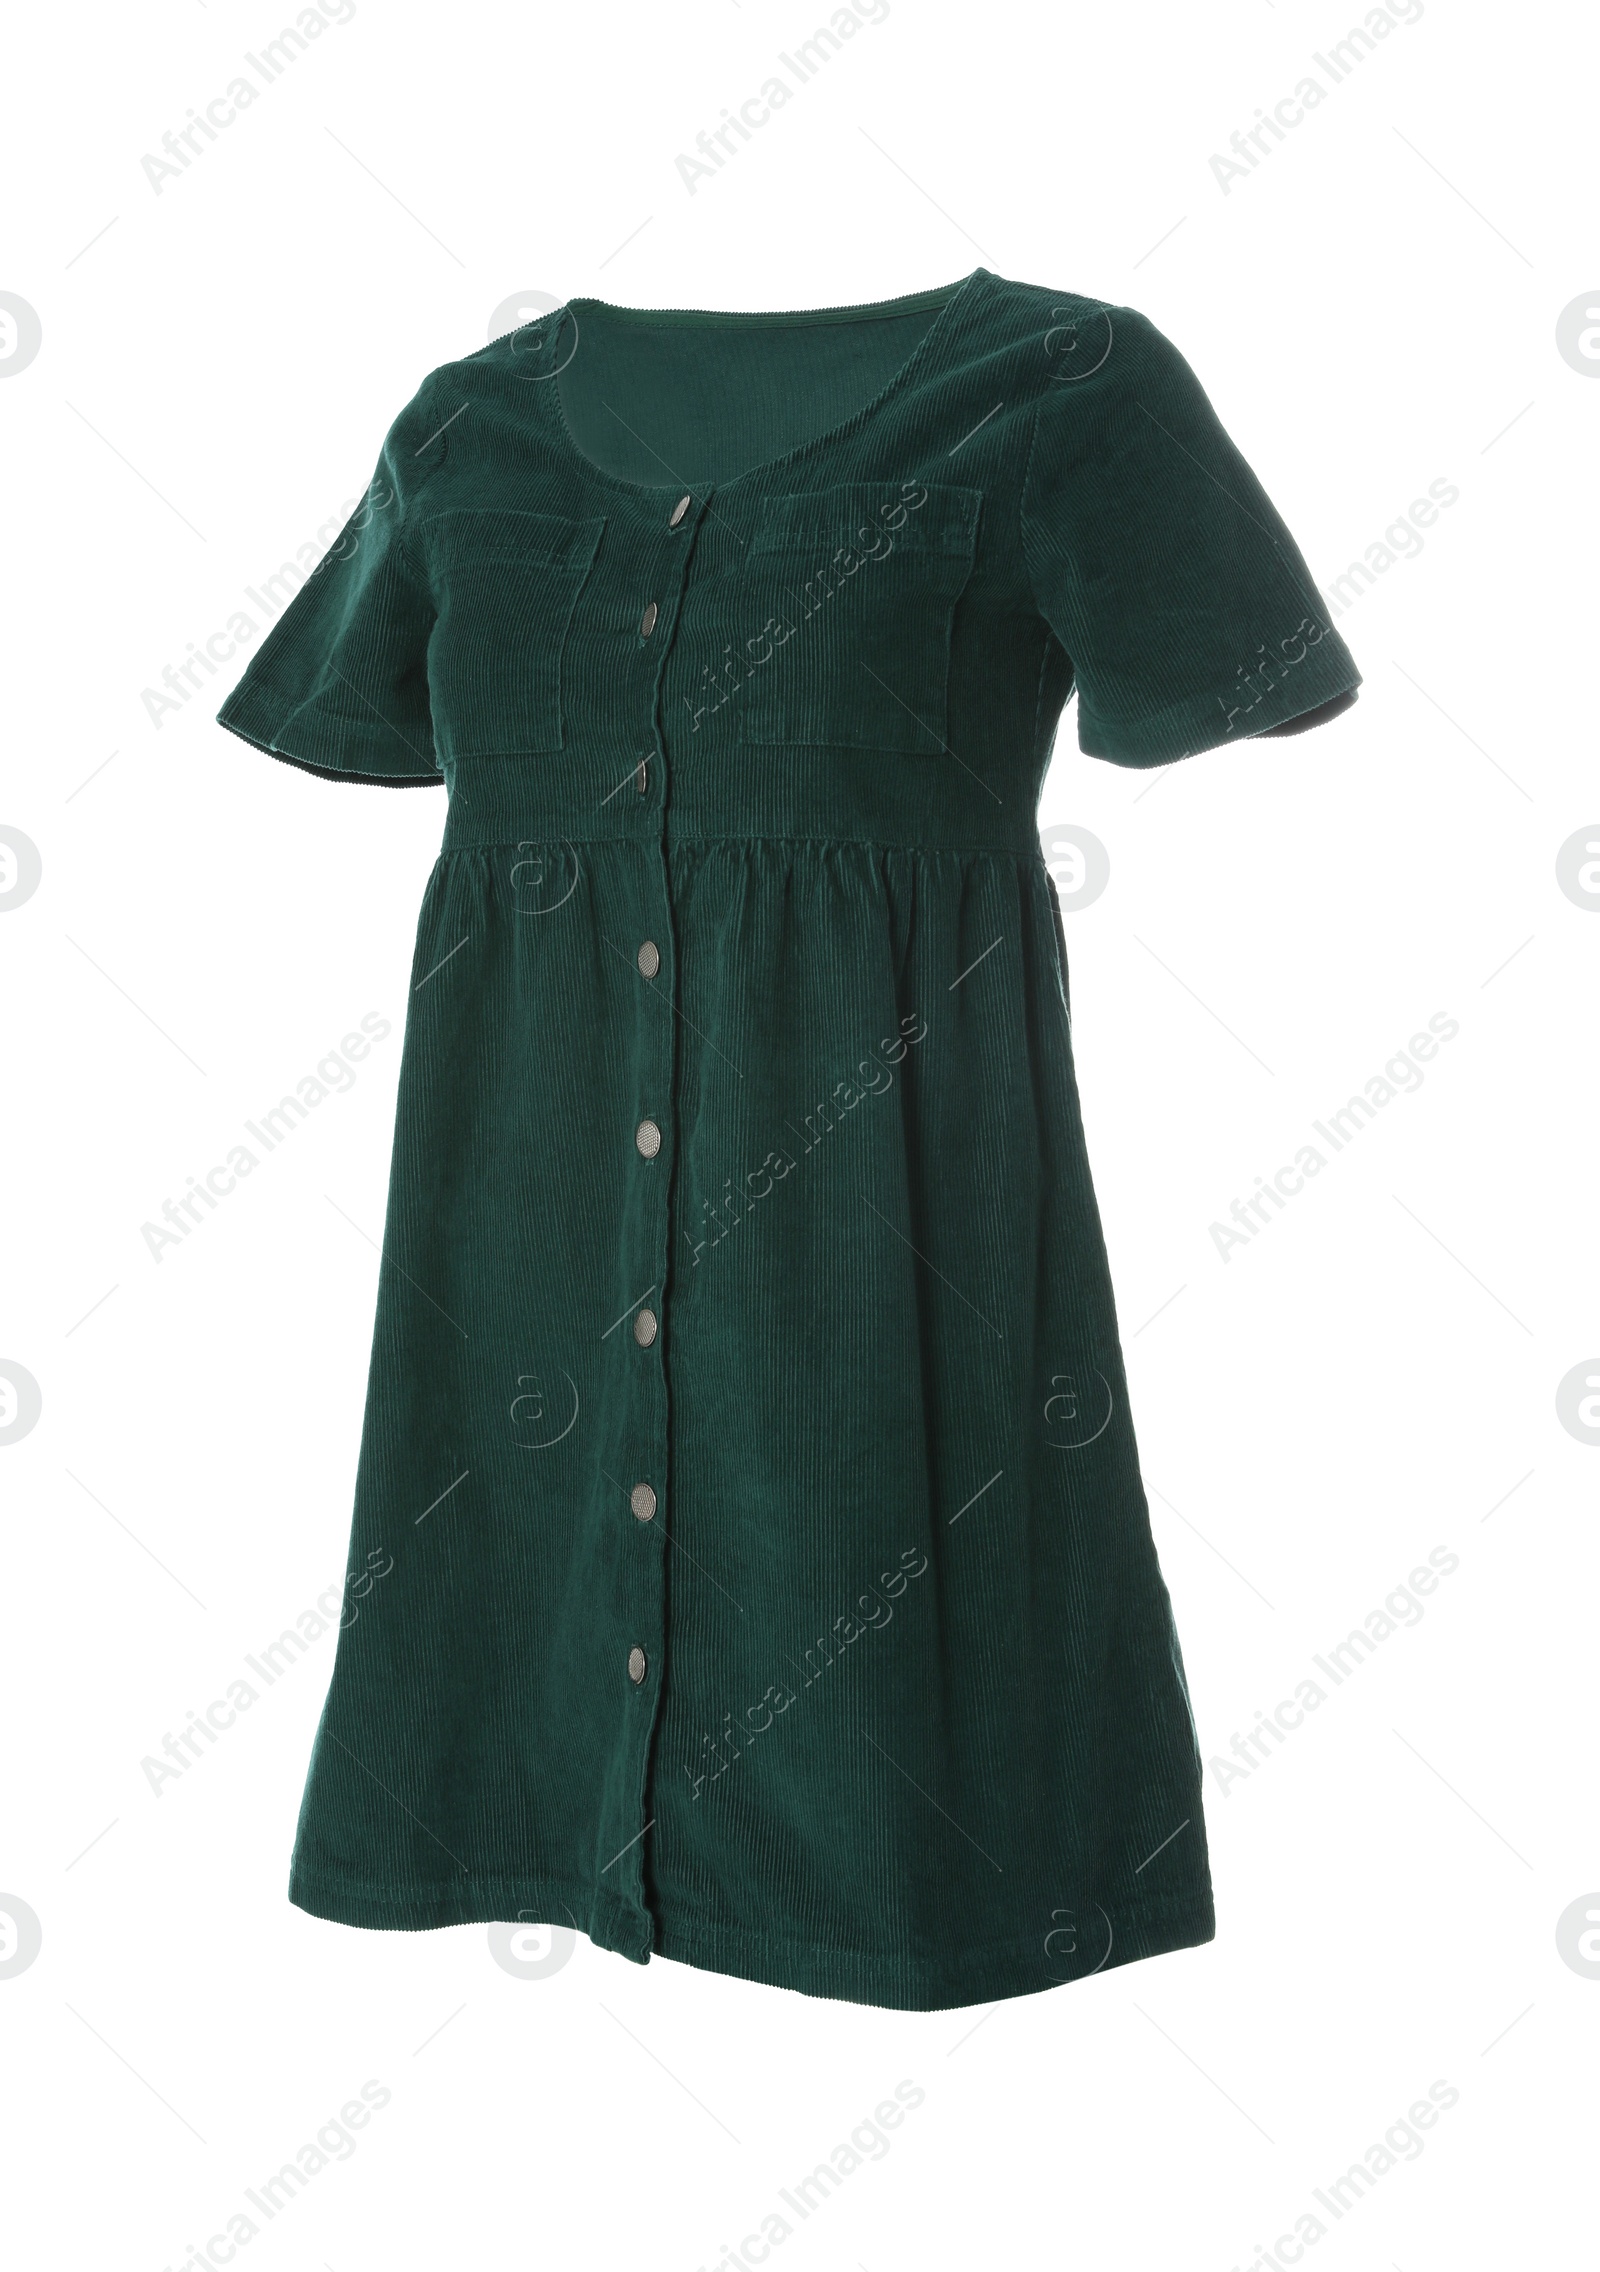 Photo of Stylish short dark green velour dress on white background